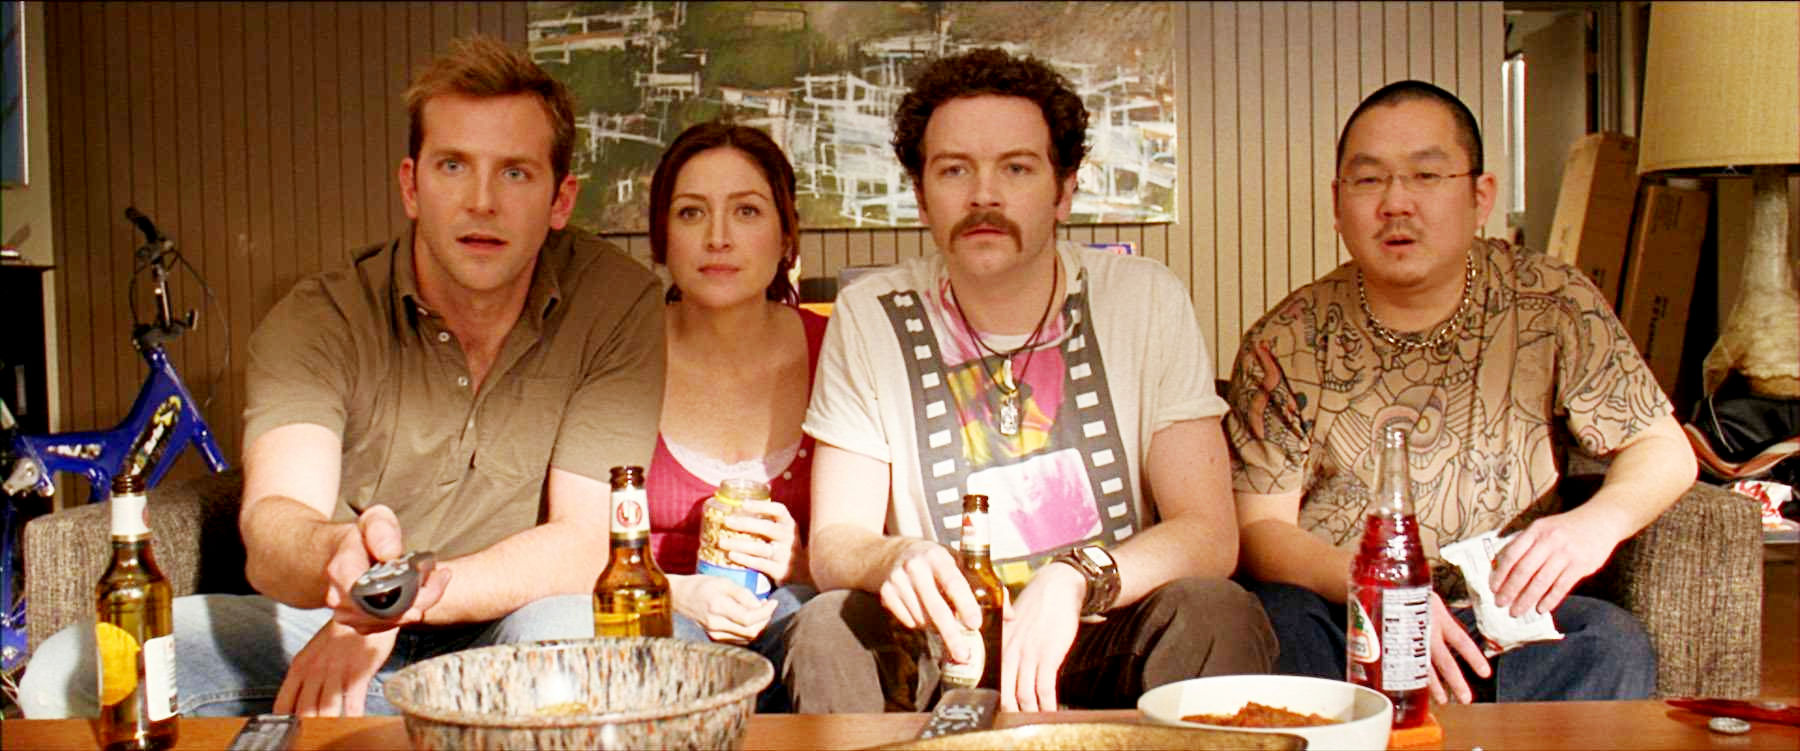 Bradley Cooper, Sasha Alexander, Danny Masterson and Aaron Takahashi in Warner Bros. Pictures' Yes Man (2008)